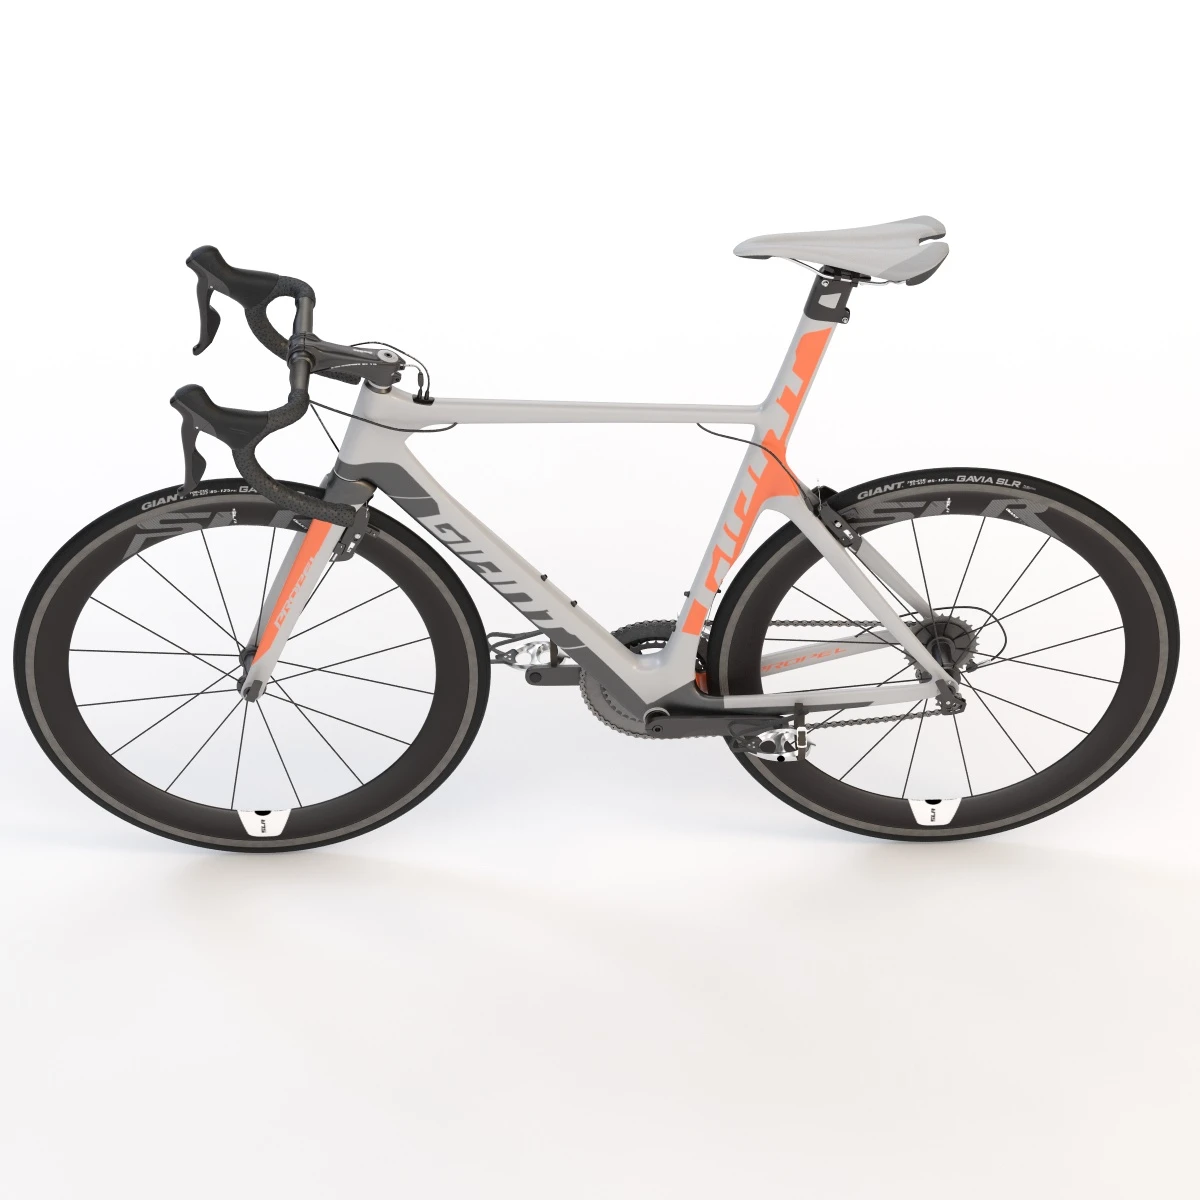 Giant Propel Advanced Sl-2 Orange Grey Black Lightweight Sprinter Bicycle 3D Model_09